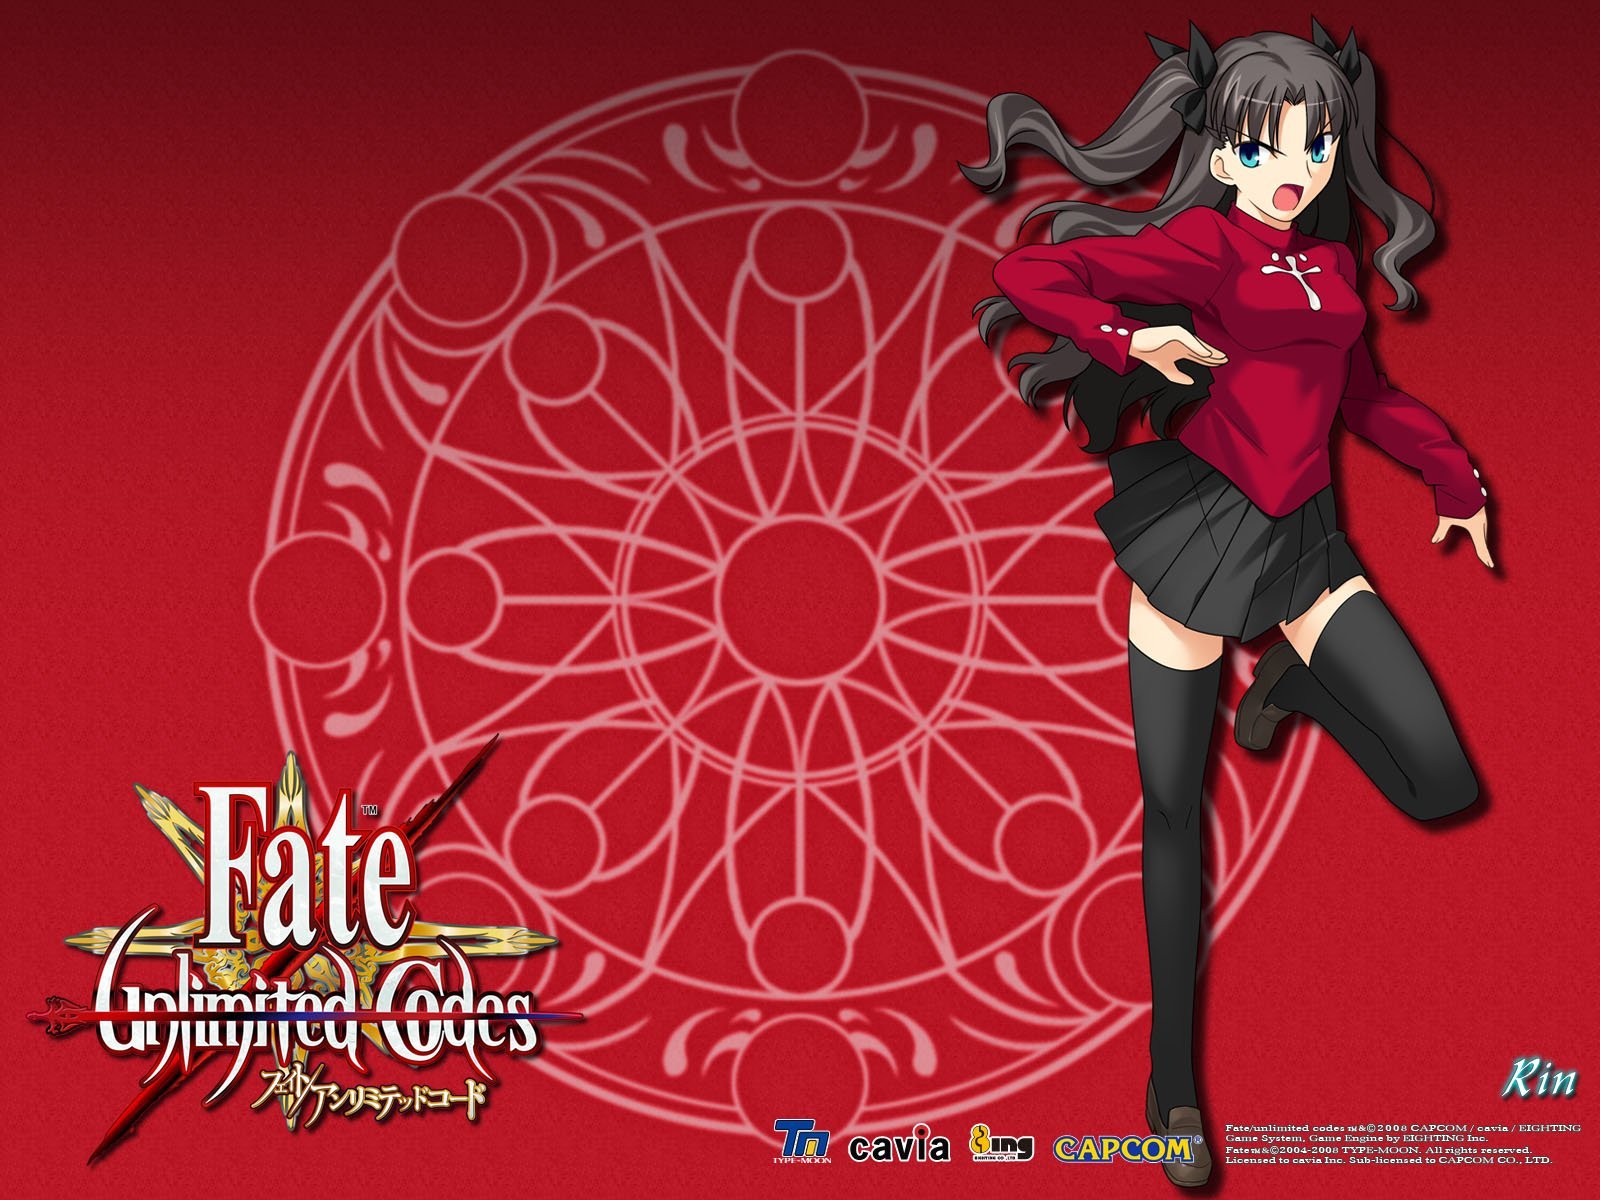 Fate Unlimited Codes Arcade Game Desktop Wallpaper 